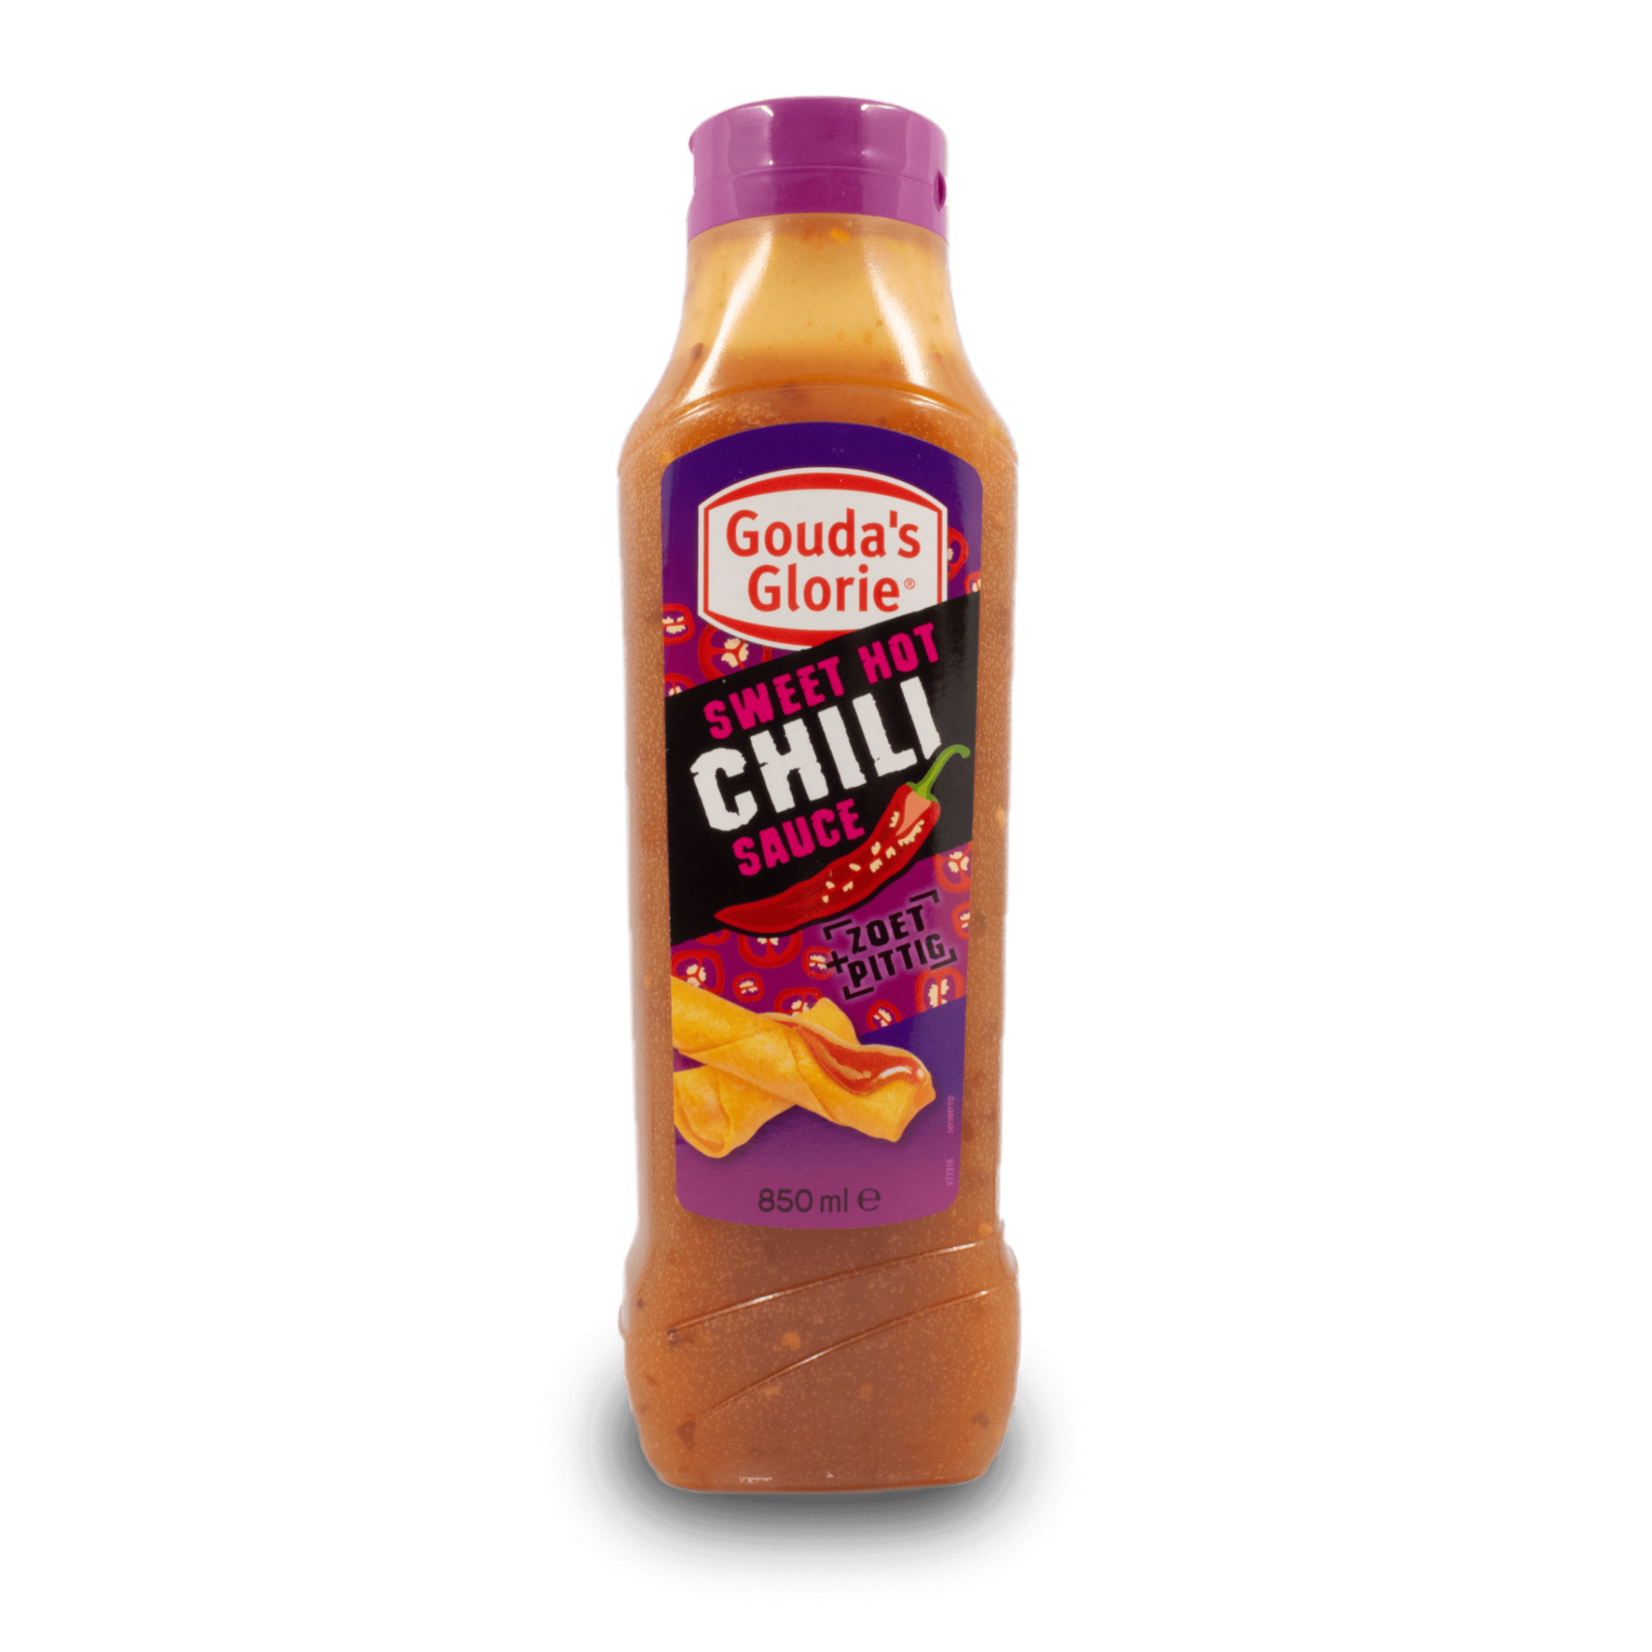 Gouda's Glorie Gouda's Glorie Sweet Hot Chili Sauce 850ml